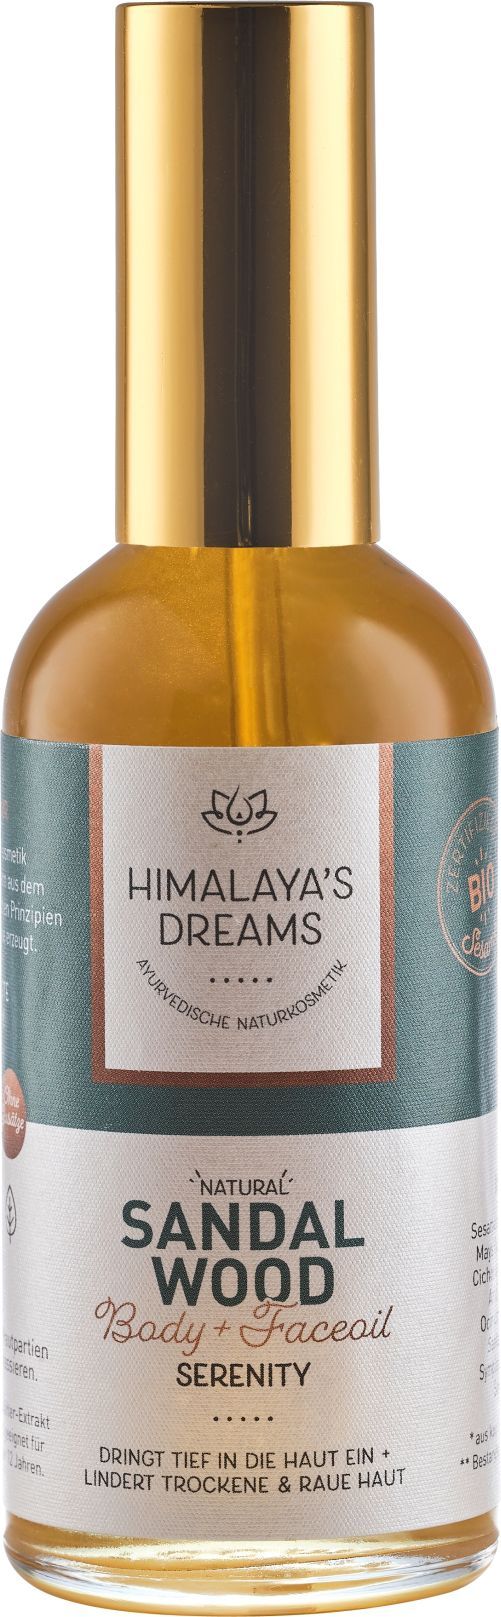 Himalaya's Dreams Ayurveda Sandalwood Body & Face-Oil